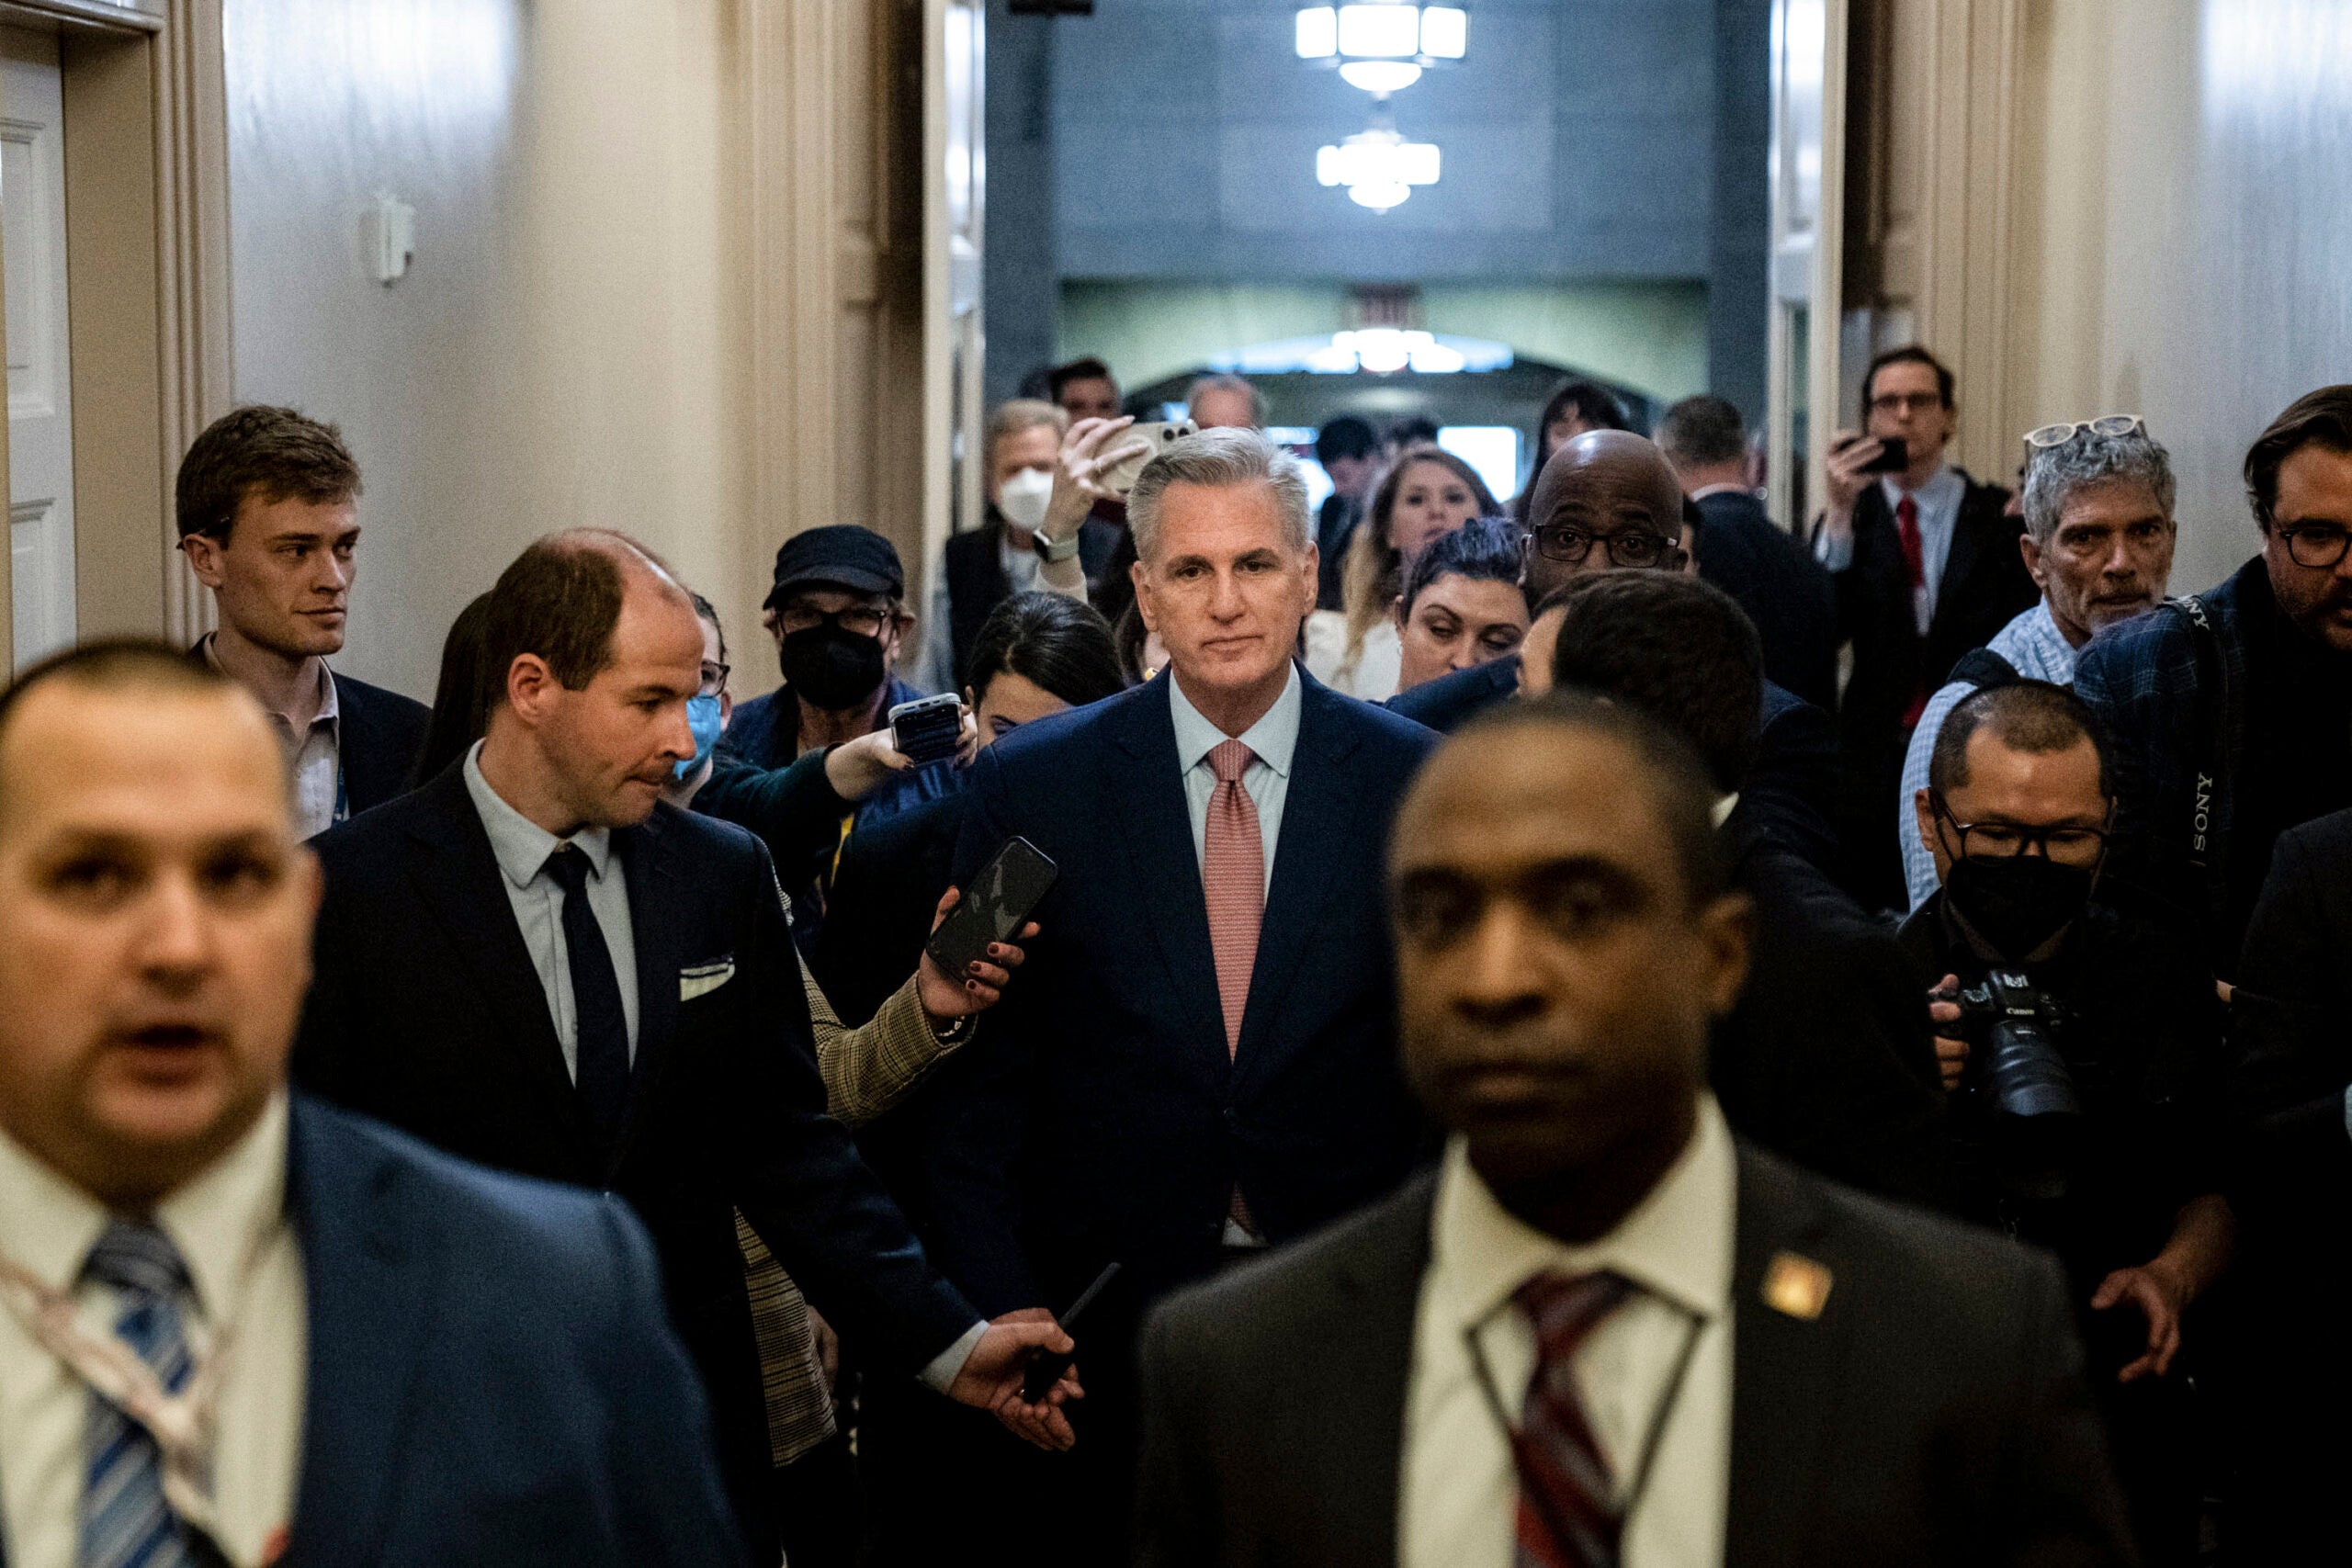 Rep. Kevin McCarthy (R-Calif.) exits a closed-door meeting regarding his speakership vote on Capitol Hill